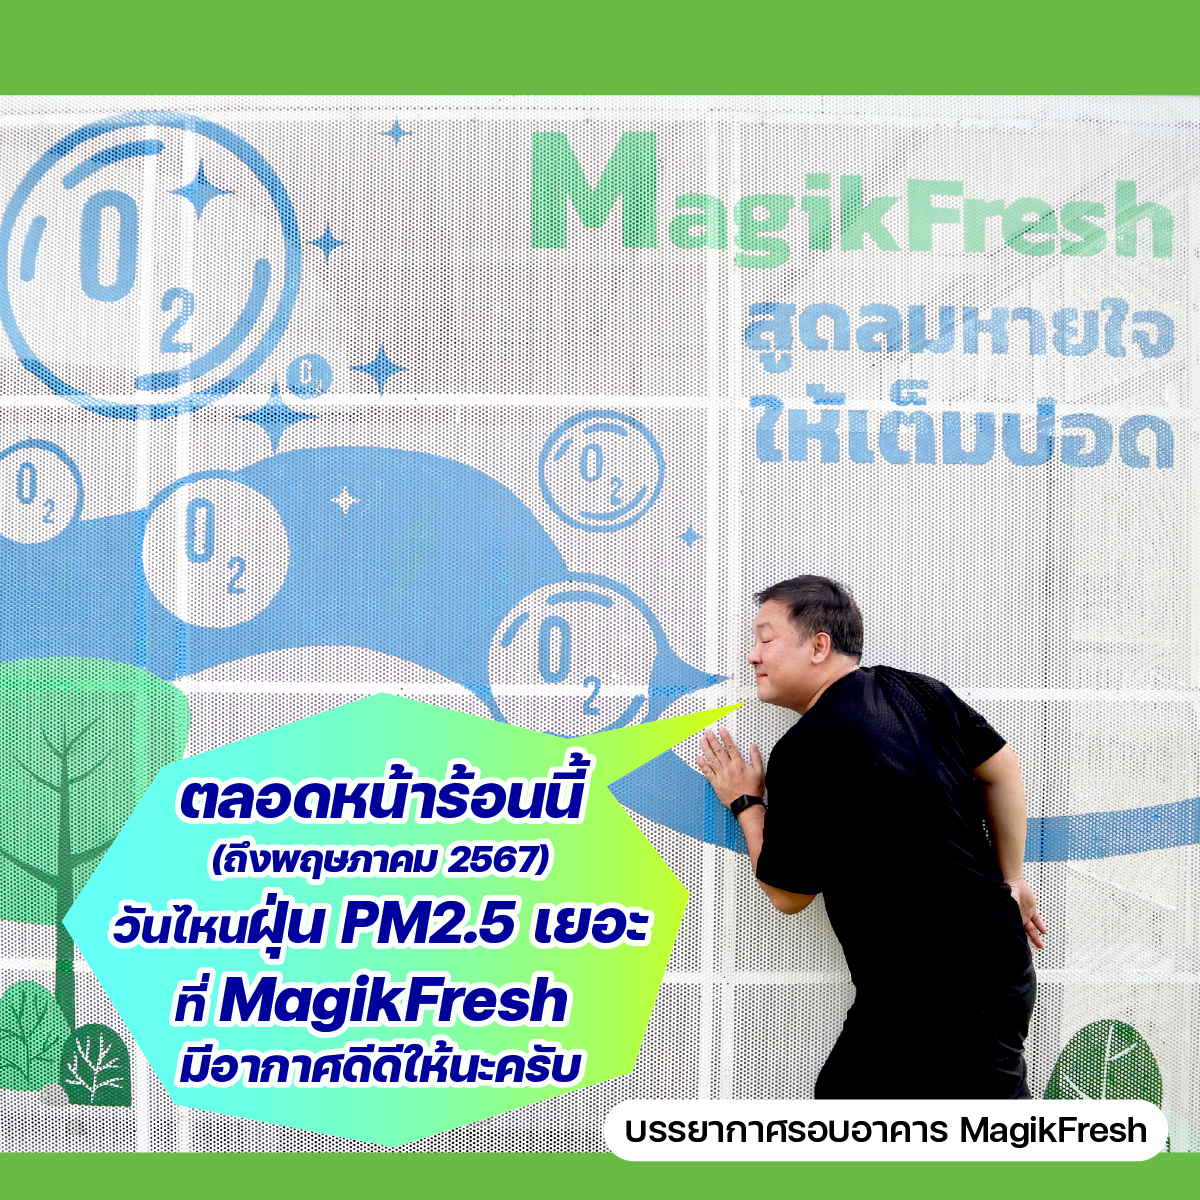 PM2.5 พุ่งสูง ชวนมาสูดอากาศสะอาดที่ ‘MagikFresh’